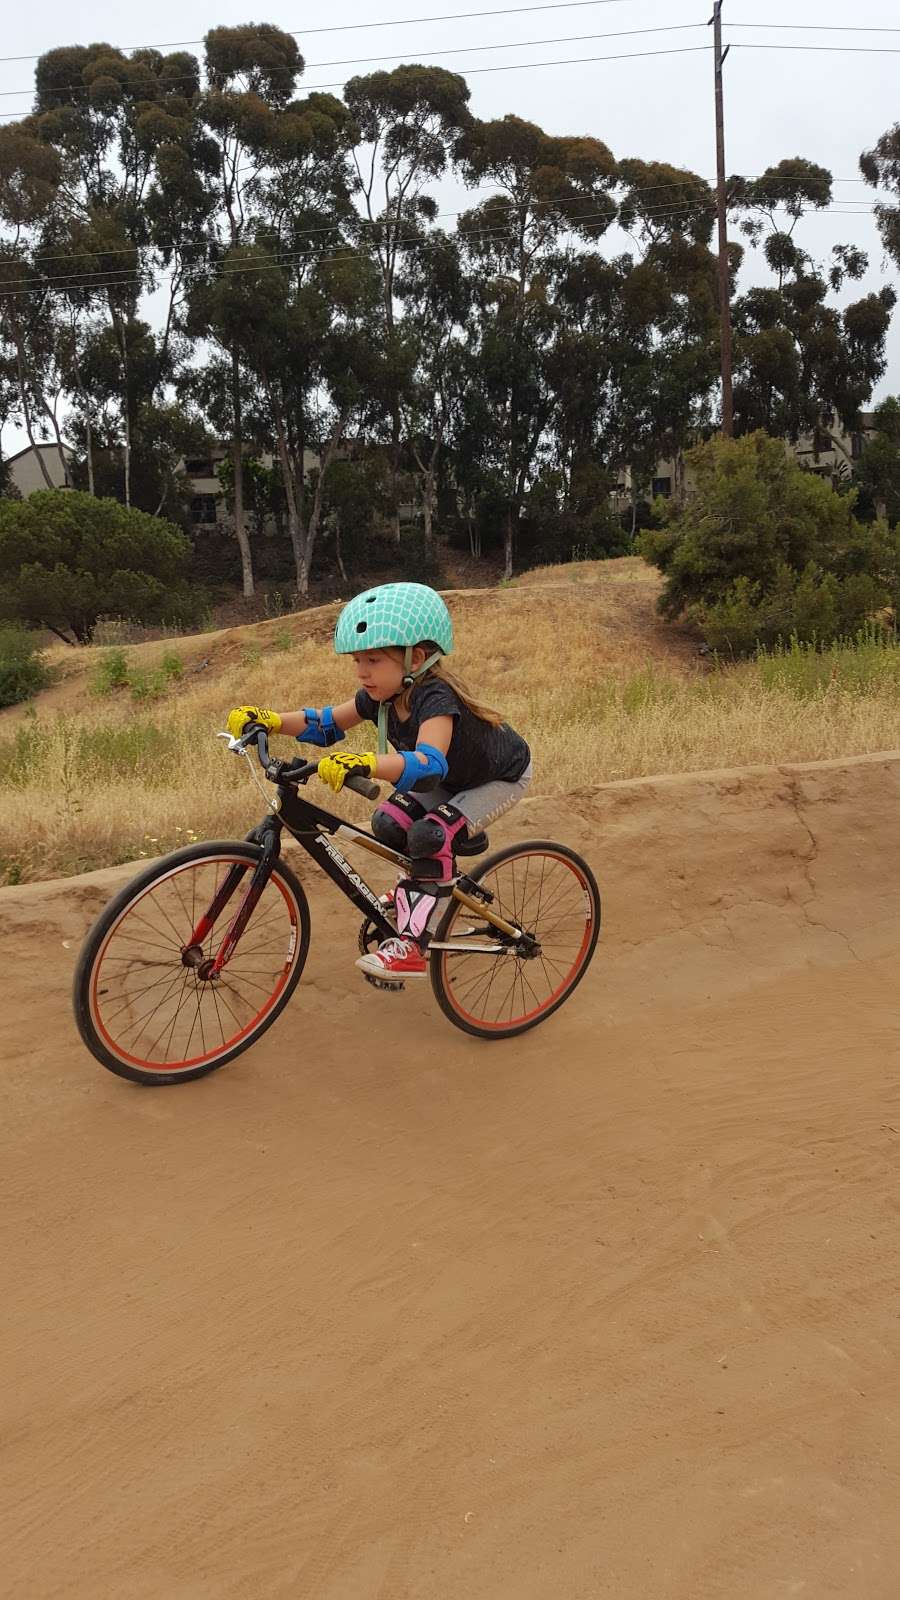 Kiddies Dirt Jumps Freeride Bike Park | San Diego, CA 92107, USA